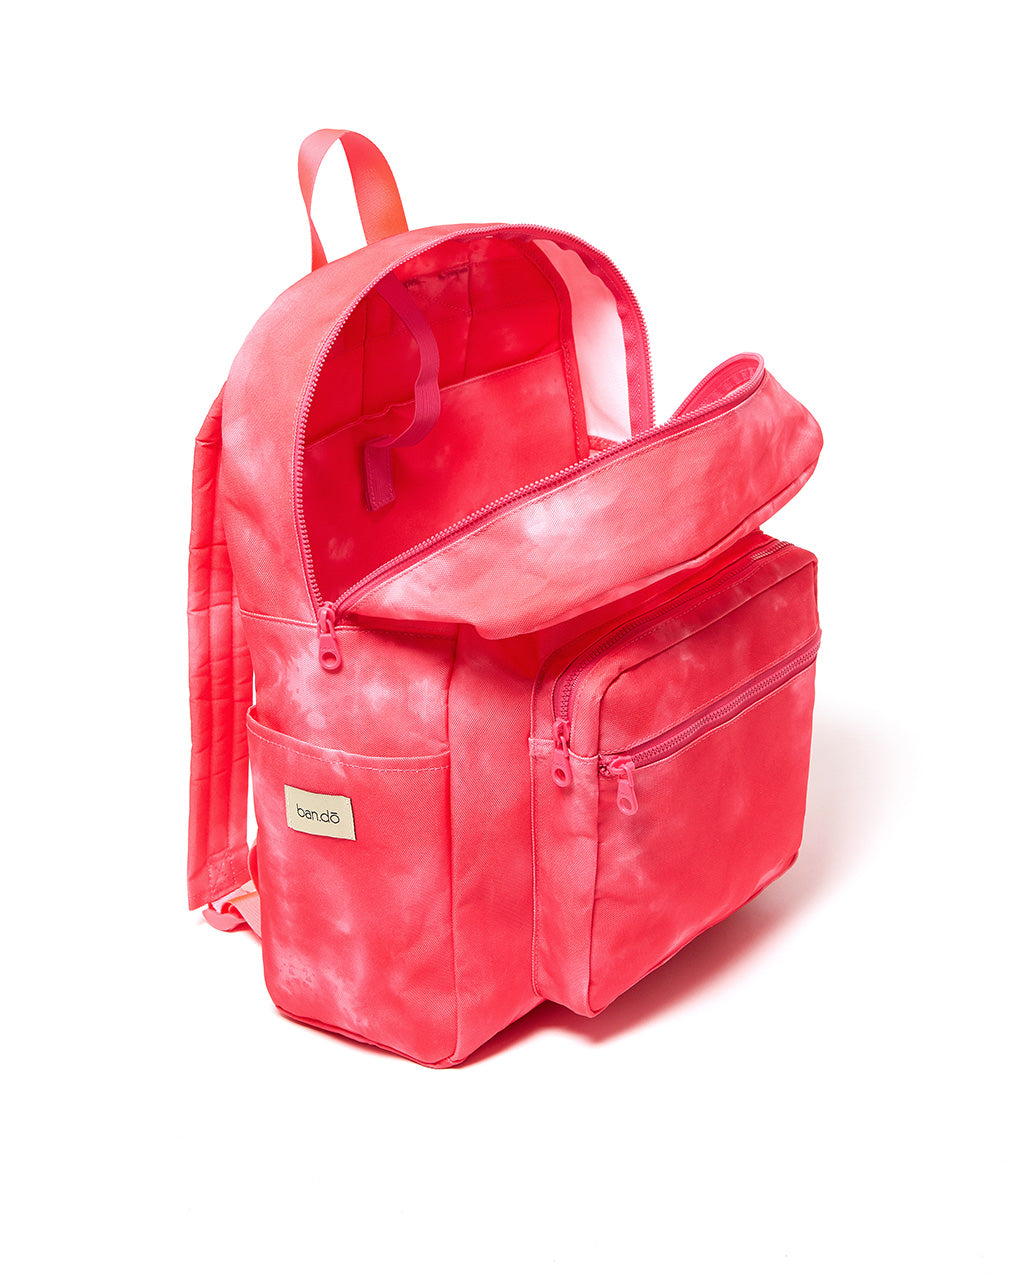 Go-Go Backpack - Hot Pink Tie Dye